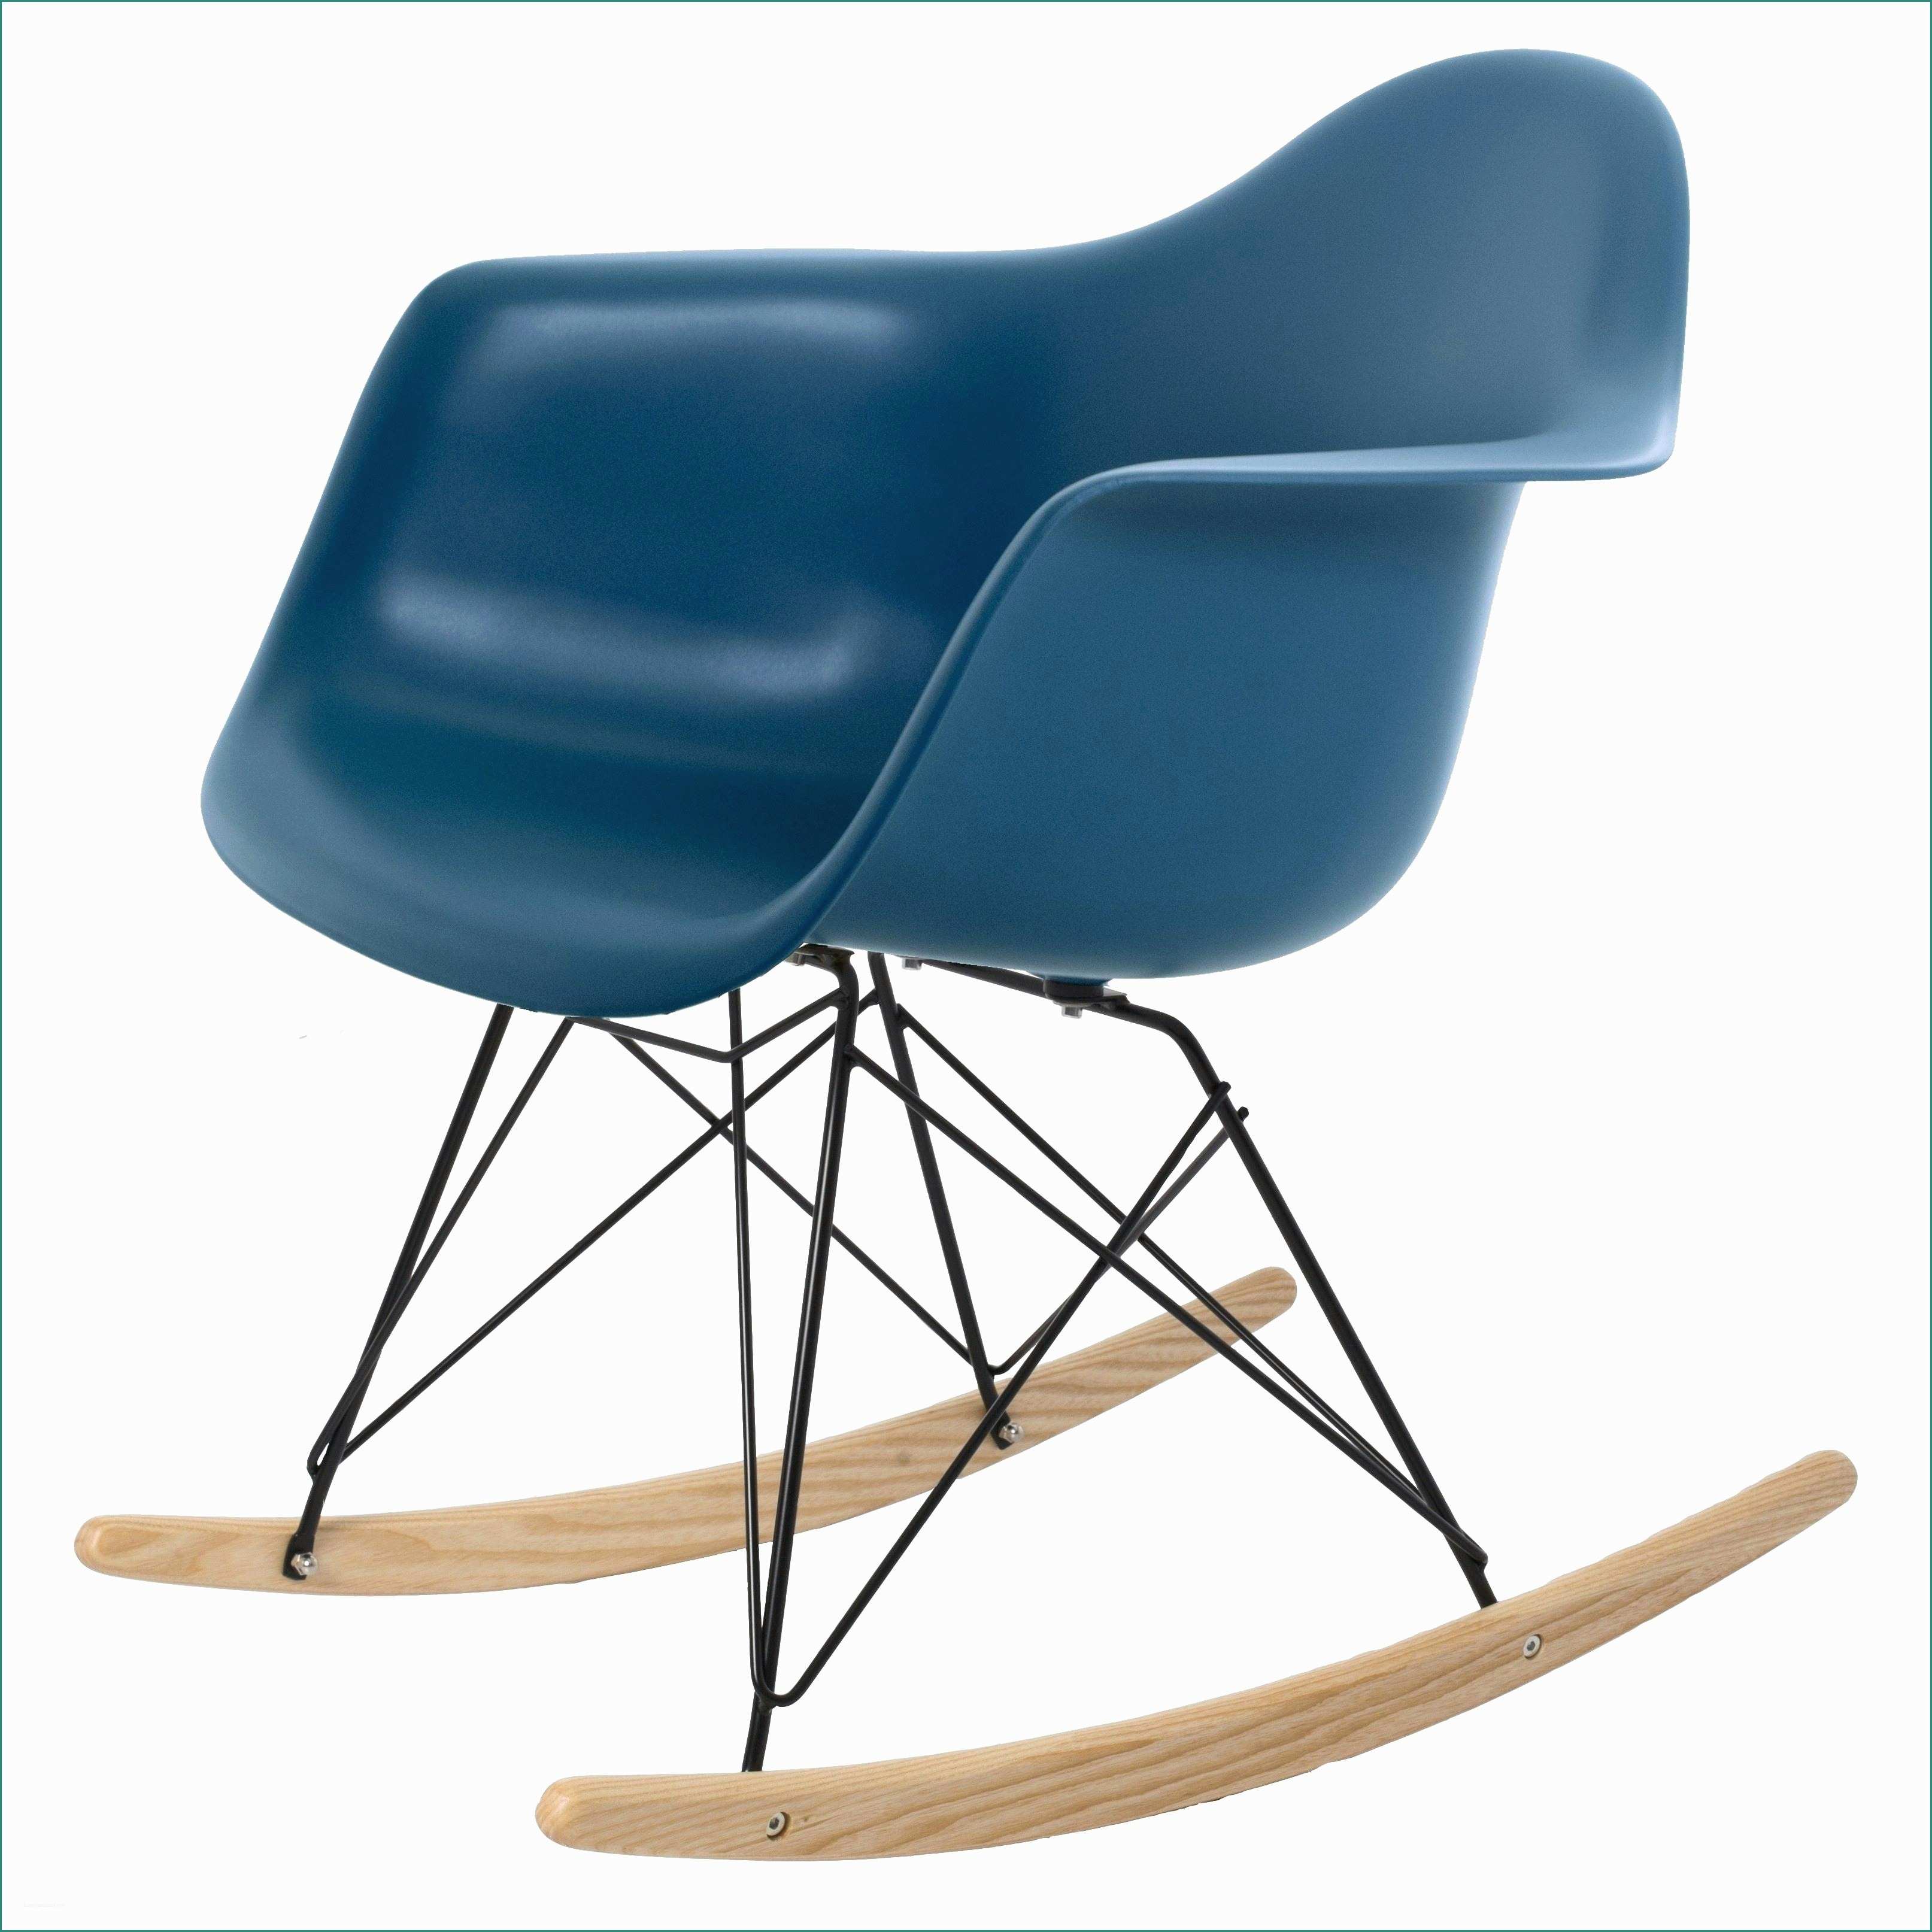 Eames Plastic Chair E Vitra Stuhl Eames Luxus Chaise Eames Vitra Eames Plastic Chair